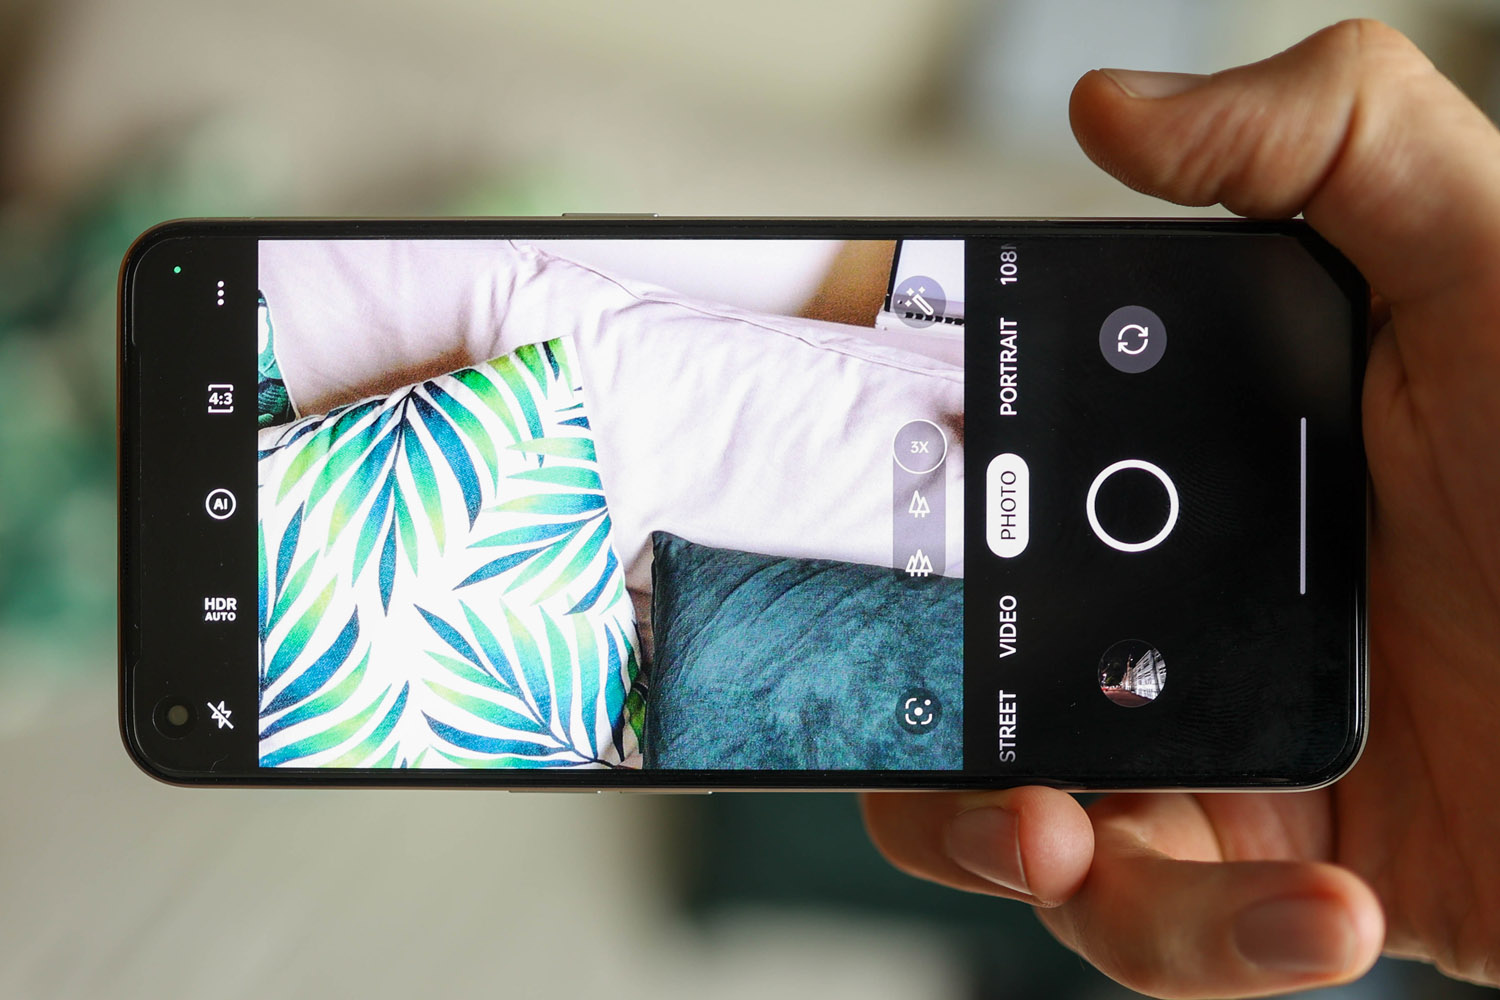 Stuff.tv Realme 9 smartphone review - On-screen handheld camera app